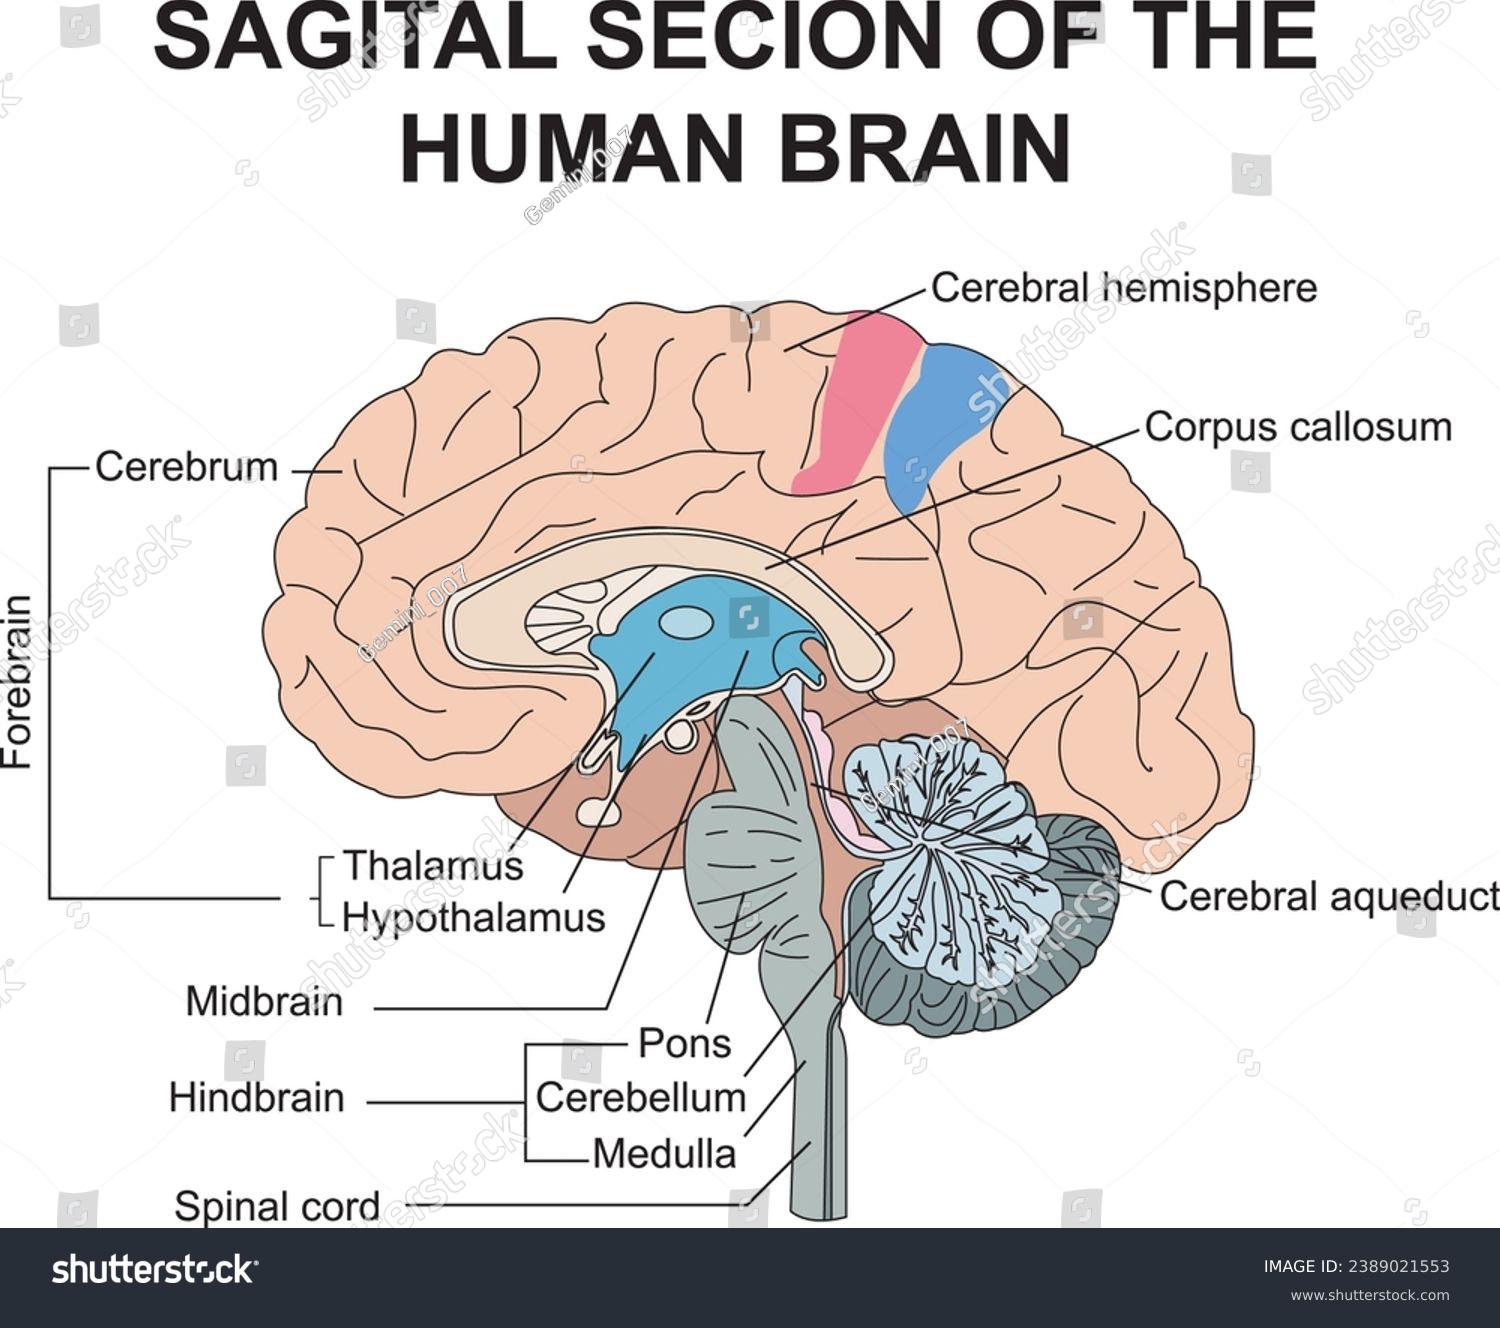 SVG of Sagital section of the human brain, cerebral hemisphere, corpus callosum, cerebral aqueduct, pons, cerebellum, medulla, spinal cord, hindbain, midbrain, forebrain svg